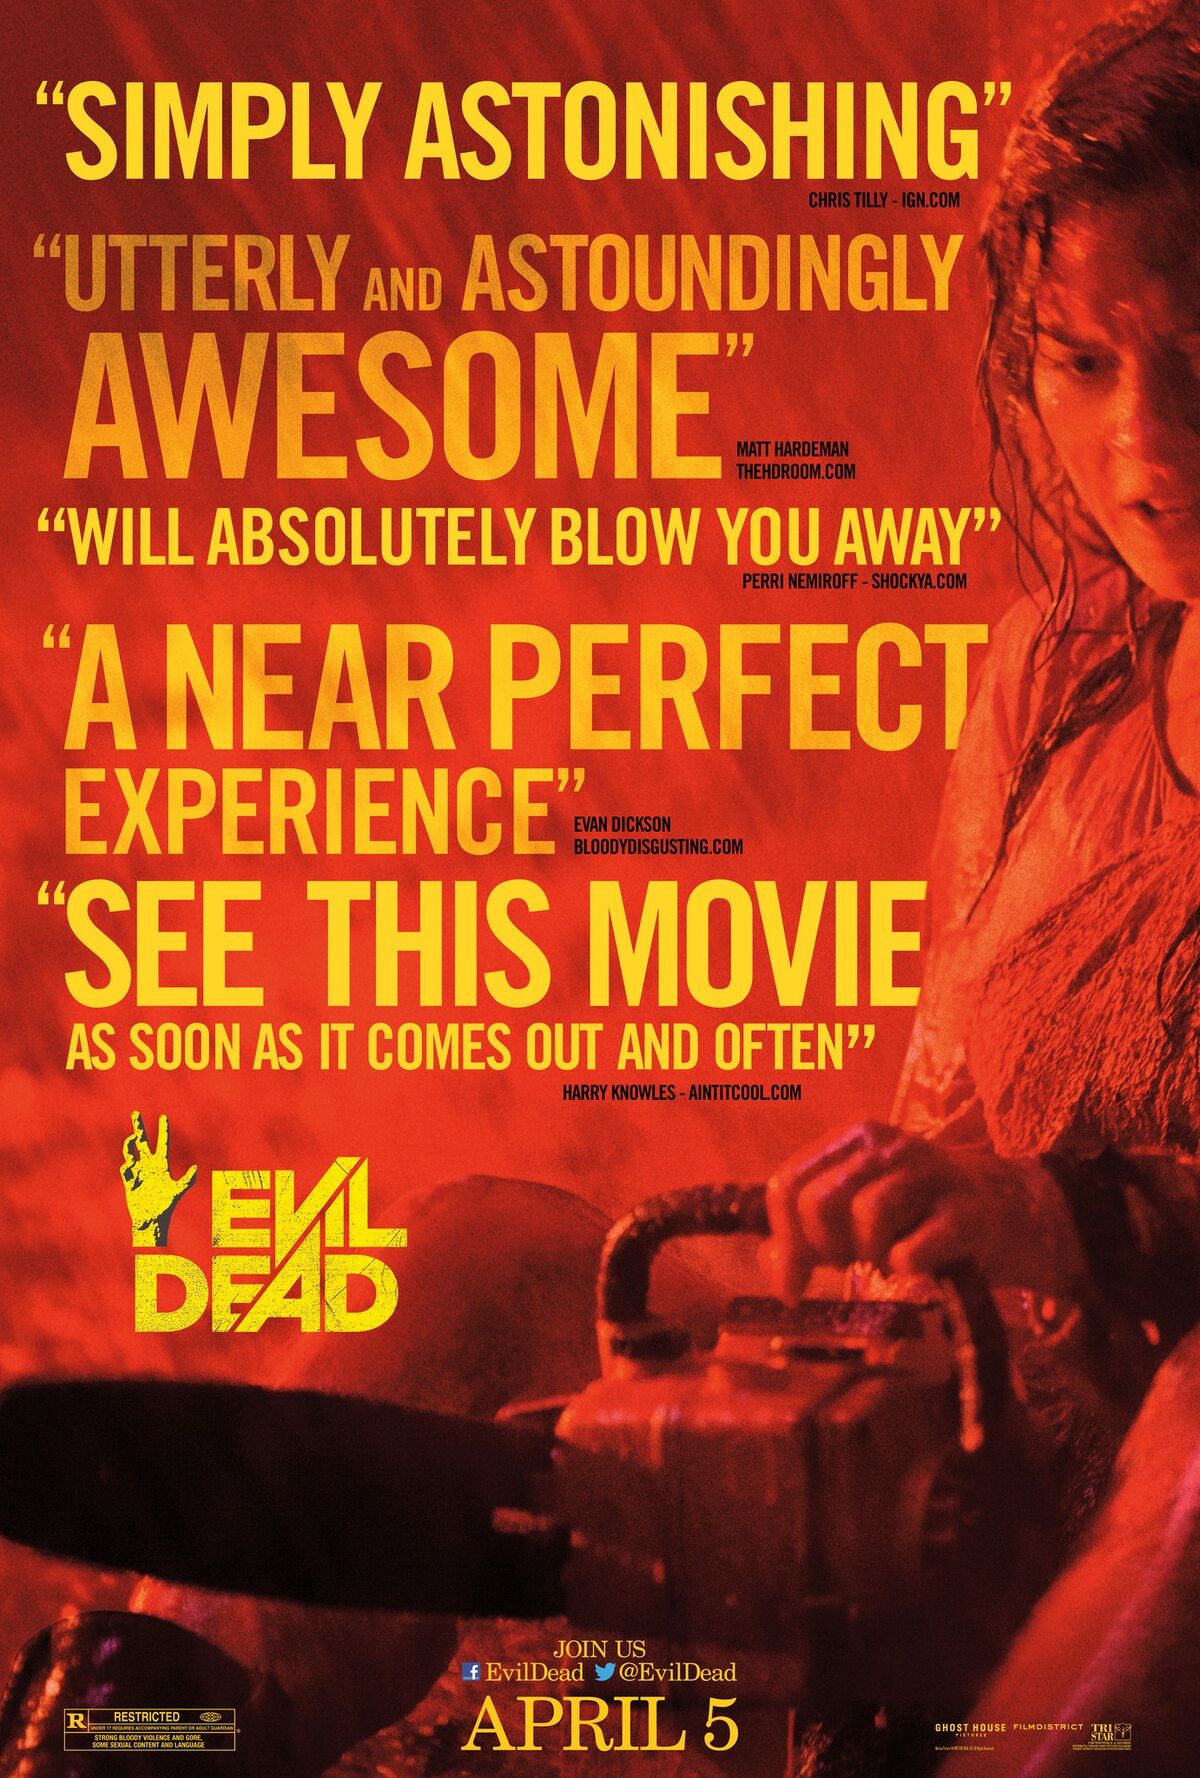 Evil Dead 2013, directed by Fede Alvarez